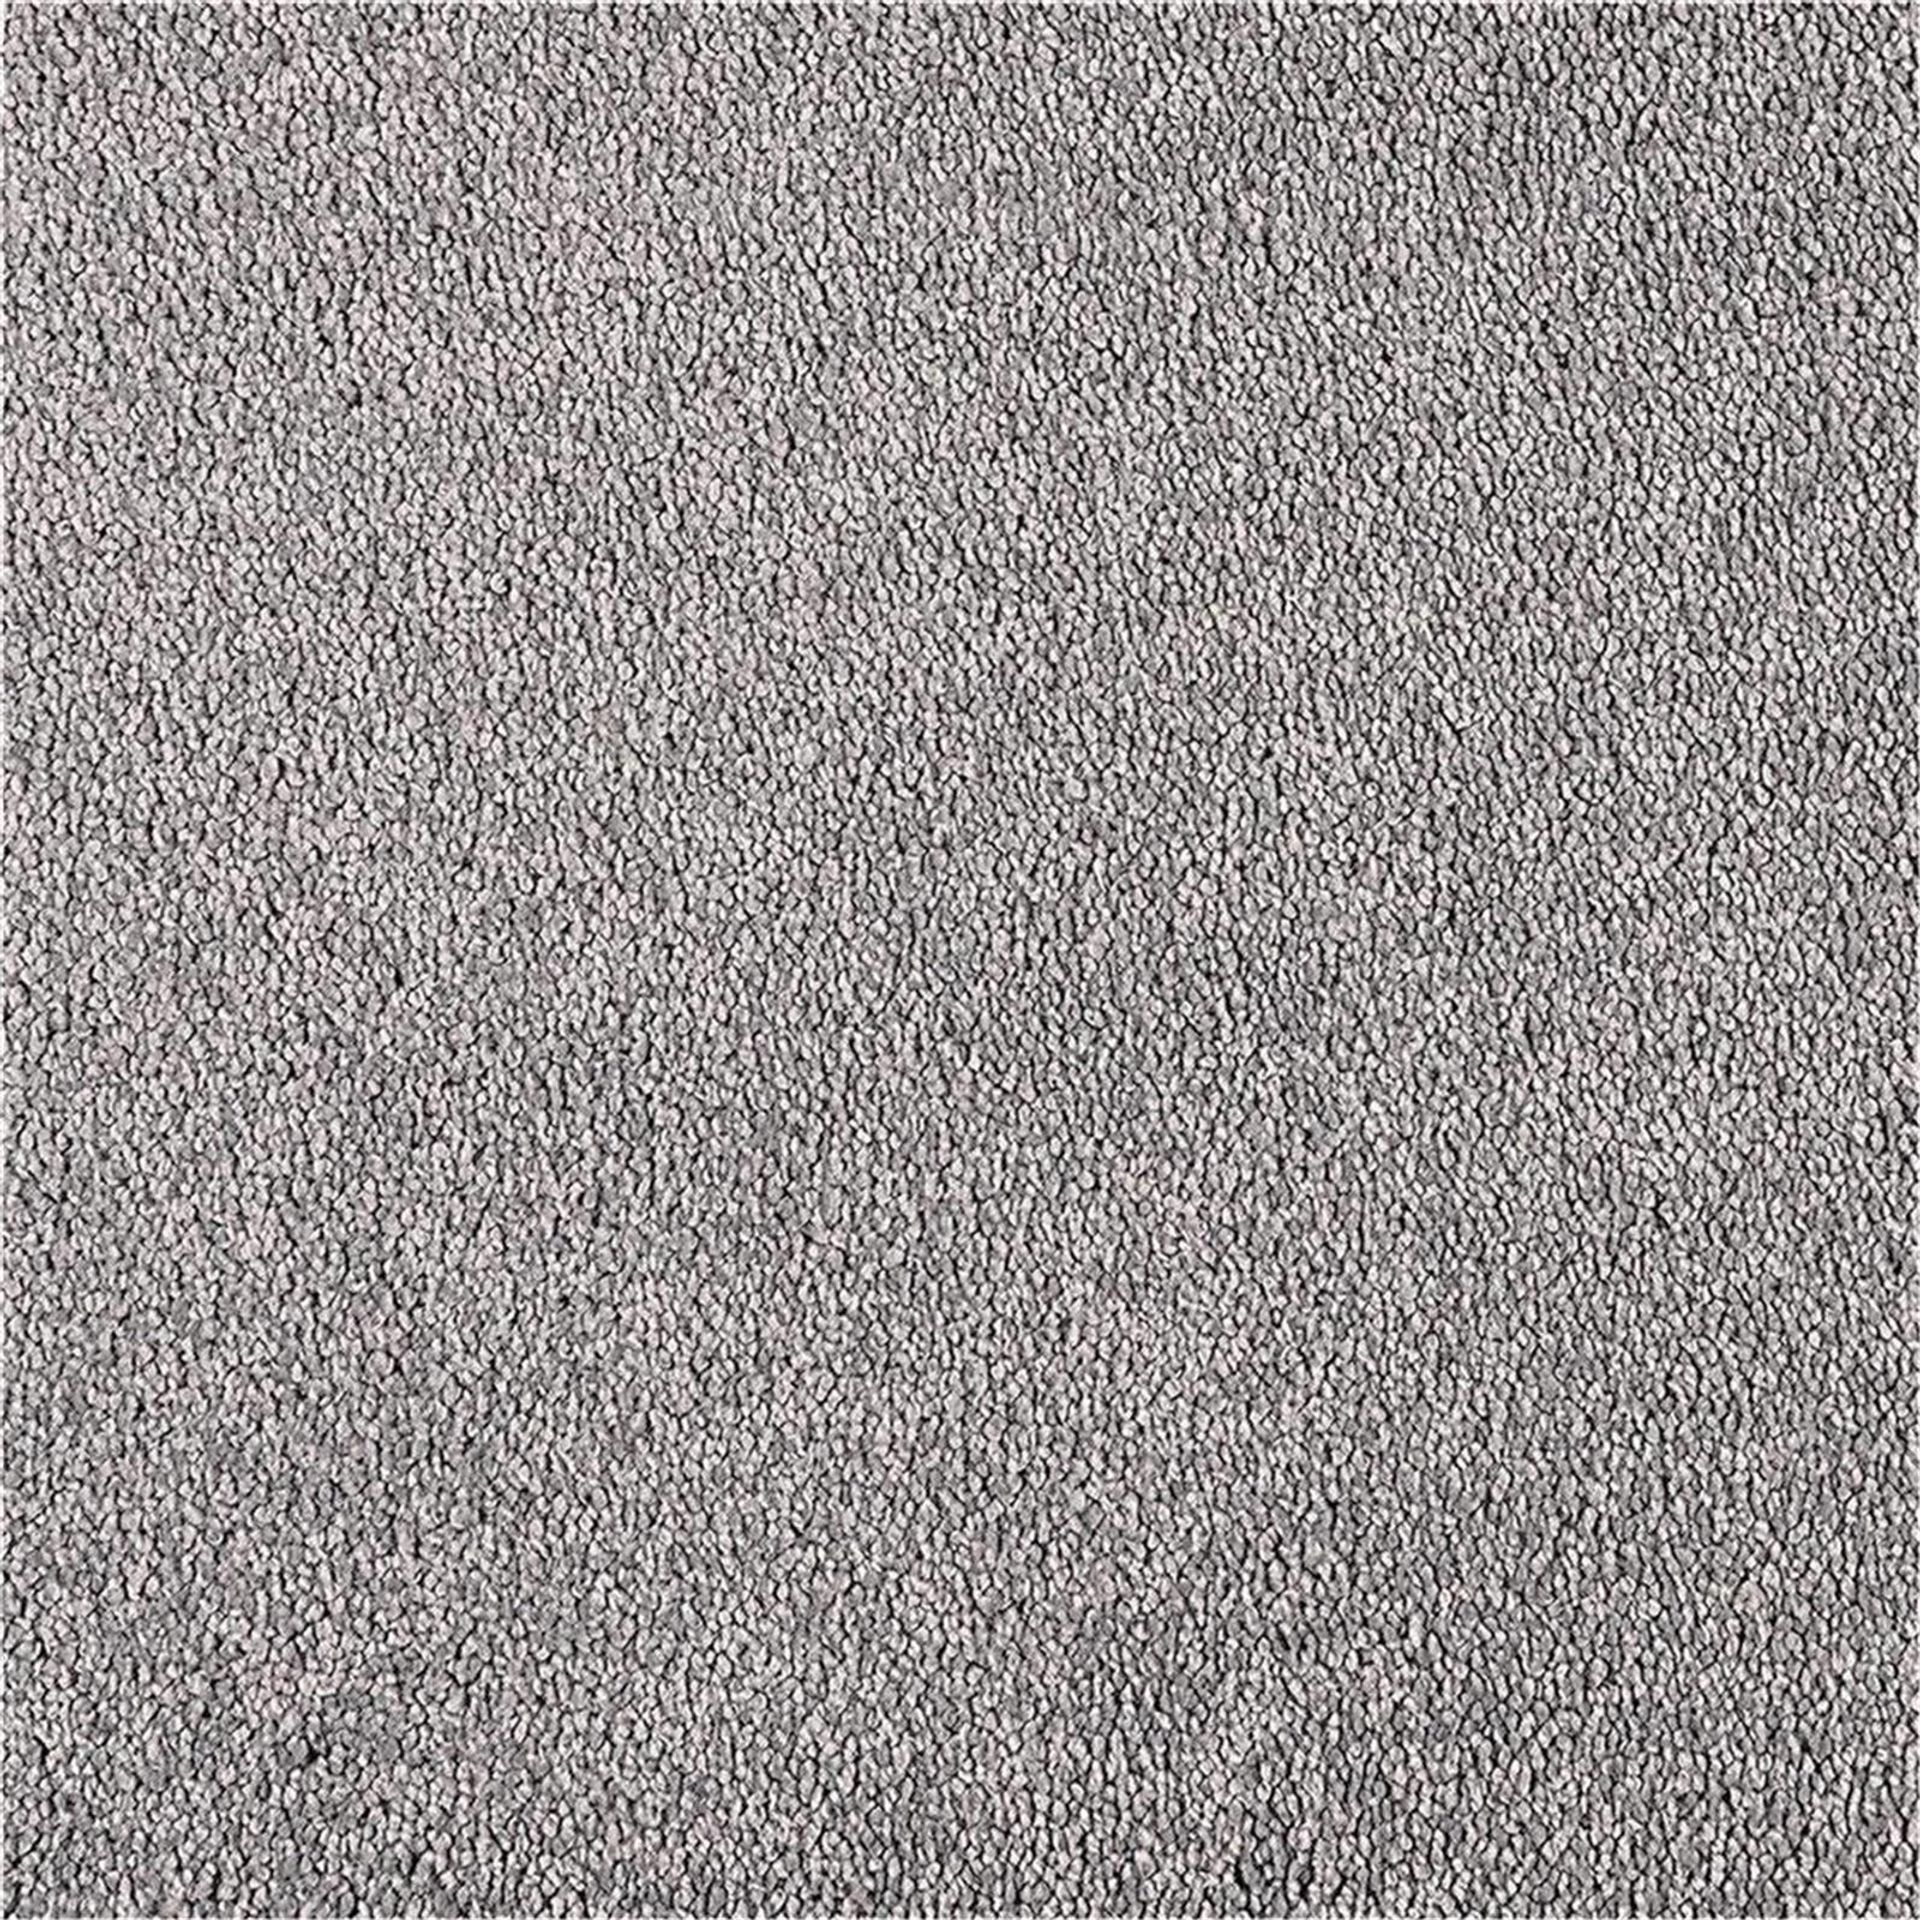 Teppichboden Infloor-Girloon Coco Shag/Langflor Grau 540 uni - Rollenbreite 400 cm